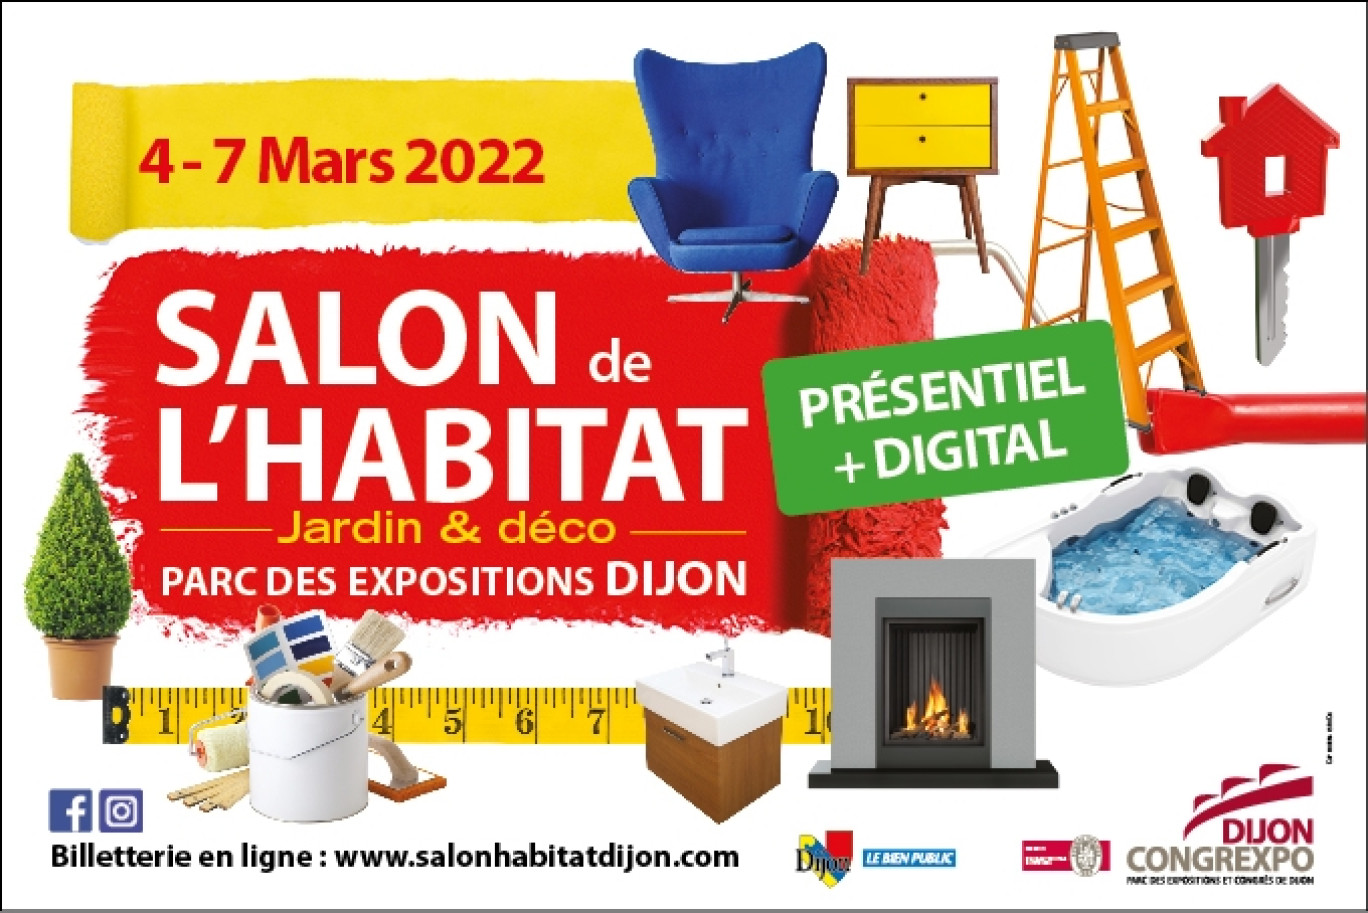  (c) Salon de l'Habitat de Dijon 